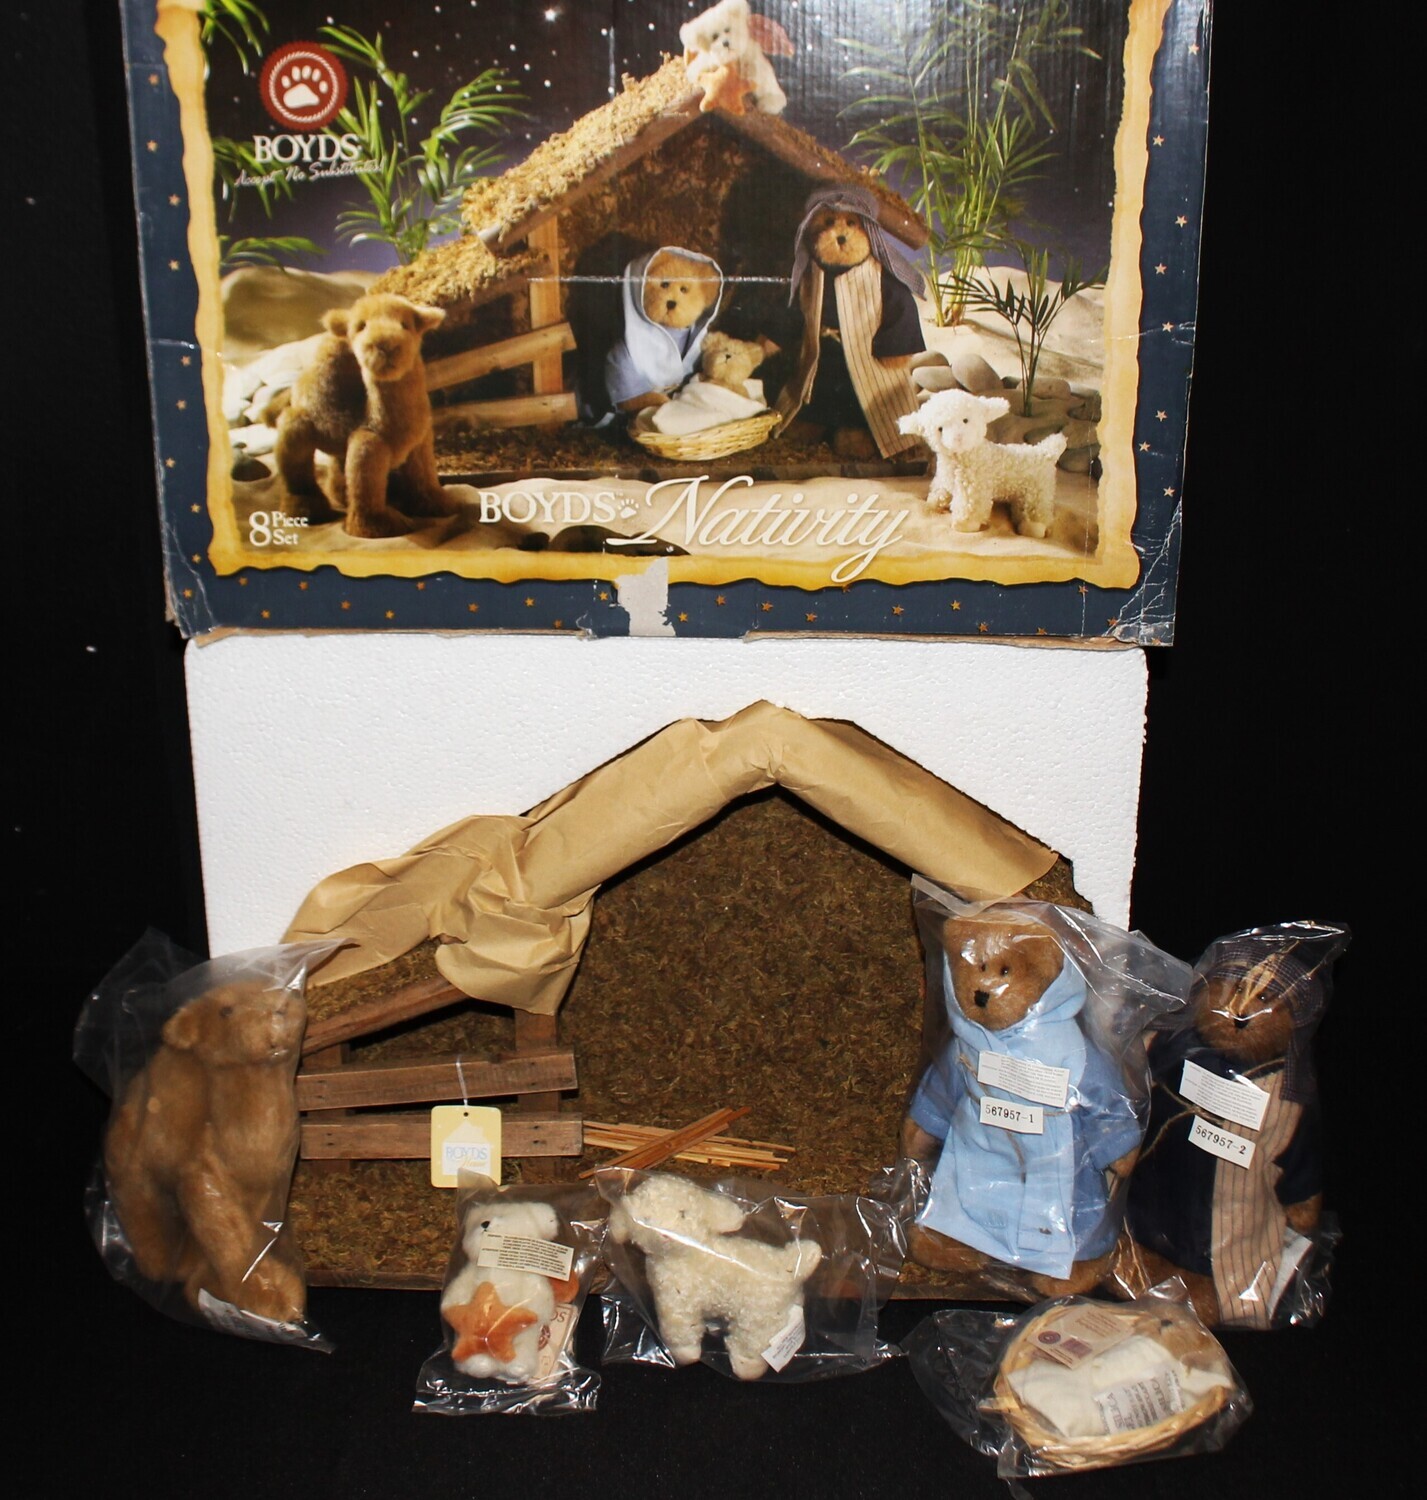 Boyds 8-Piece Nativity Set Plush Bears, Camel, Lamb & Creche New in Box w/ Tags